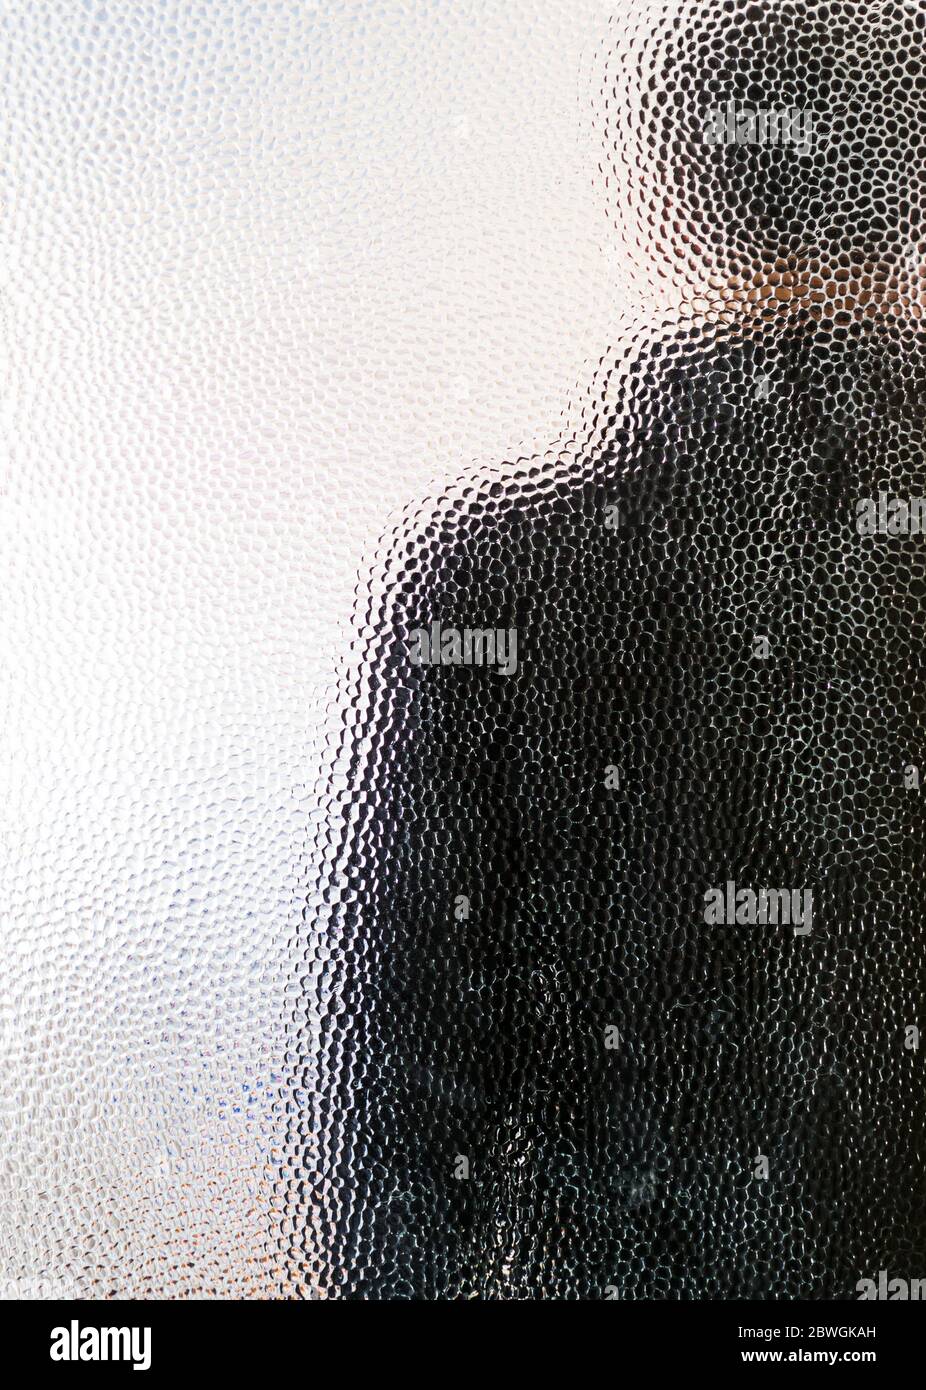 Man in black behind closed door through glass Stock Photo